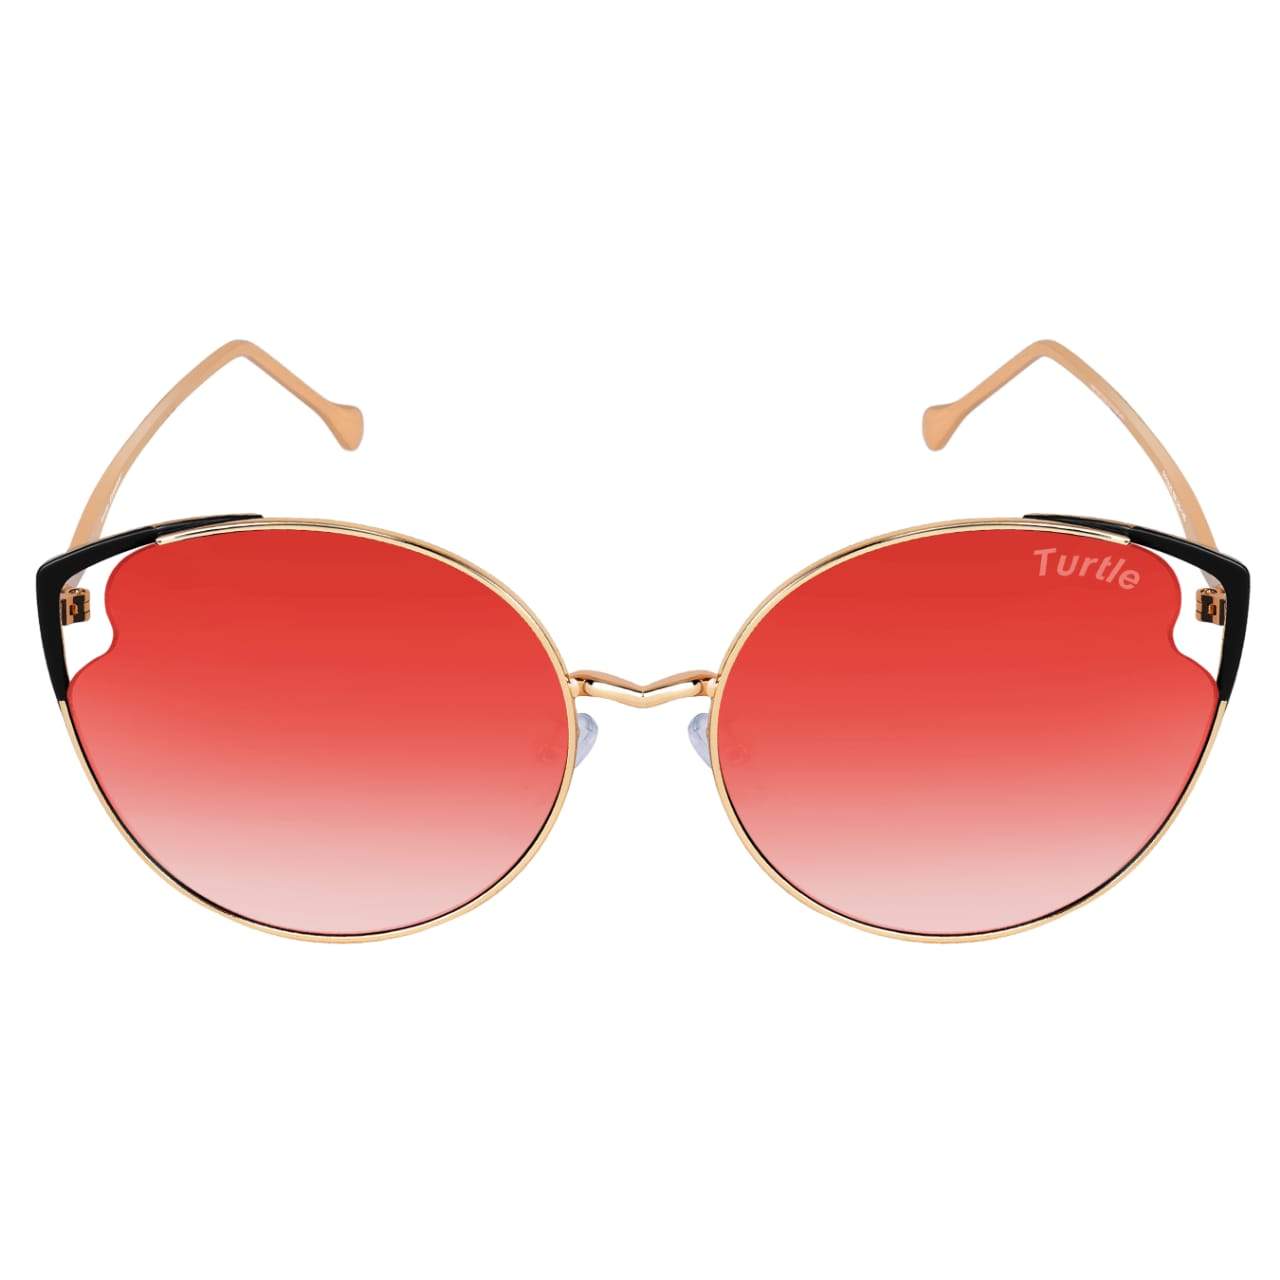 New Cat Eye Orange Gradient Sunglasses For Women-Unique and Classy